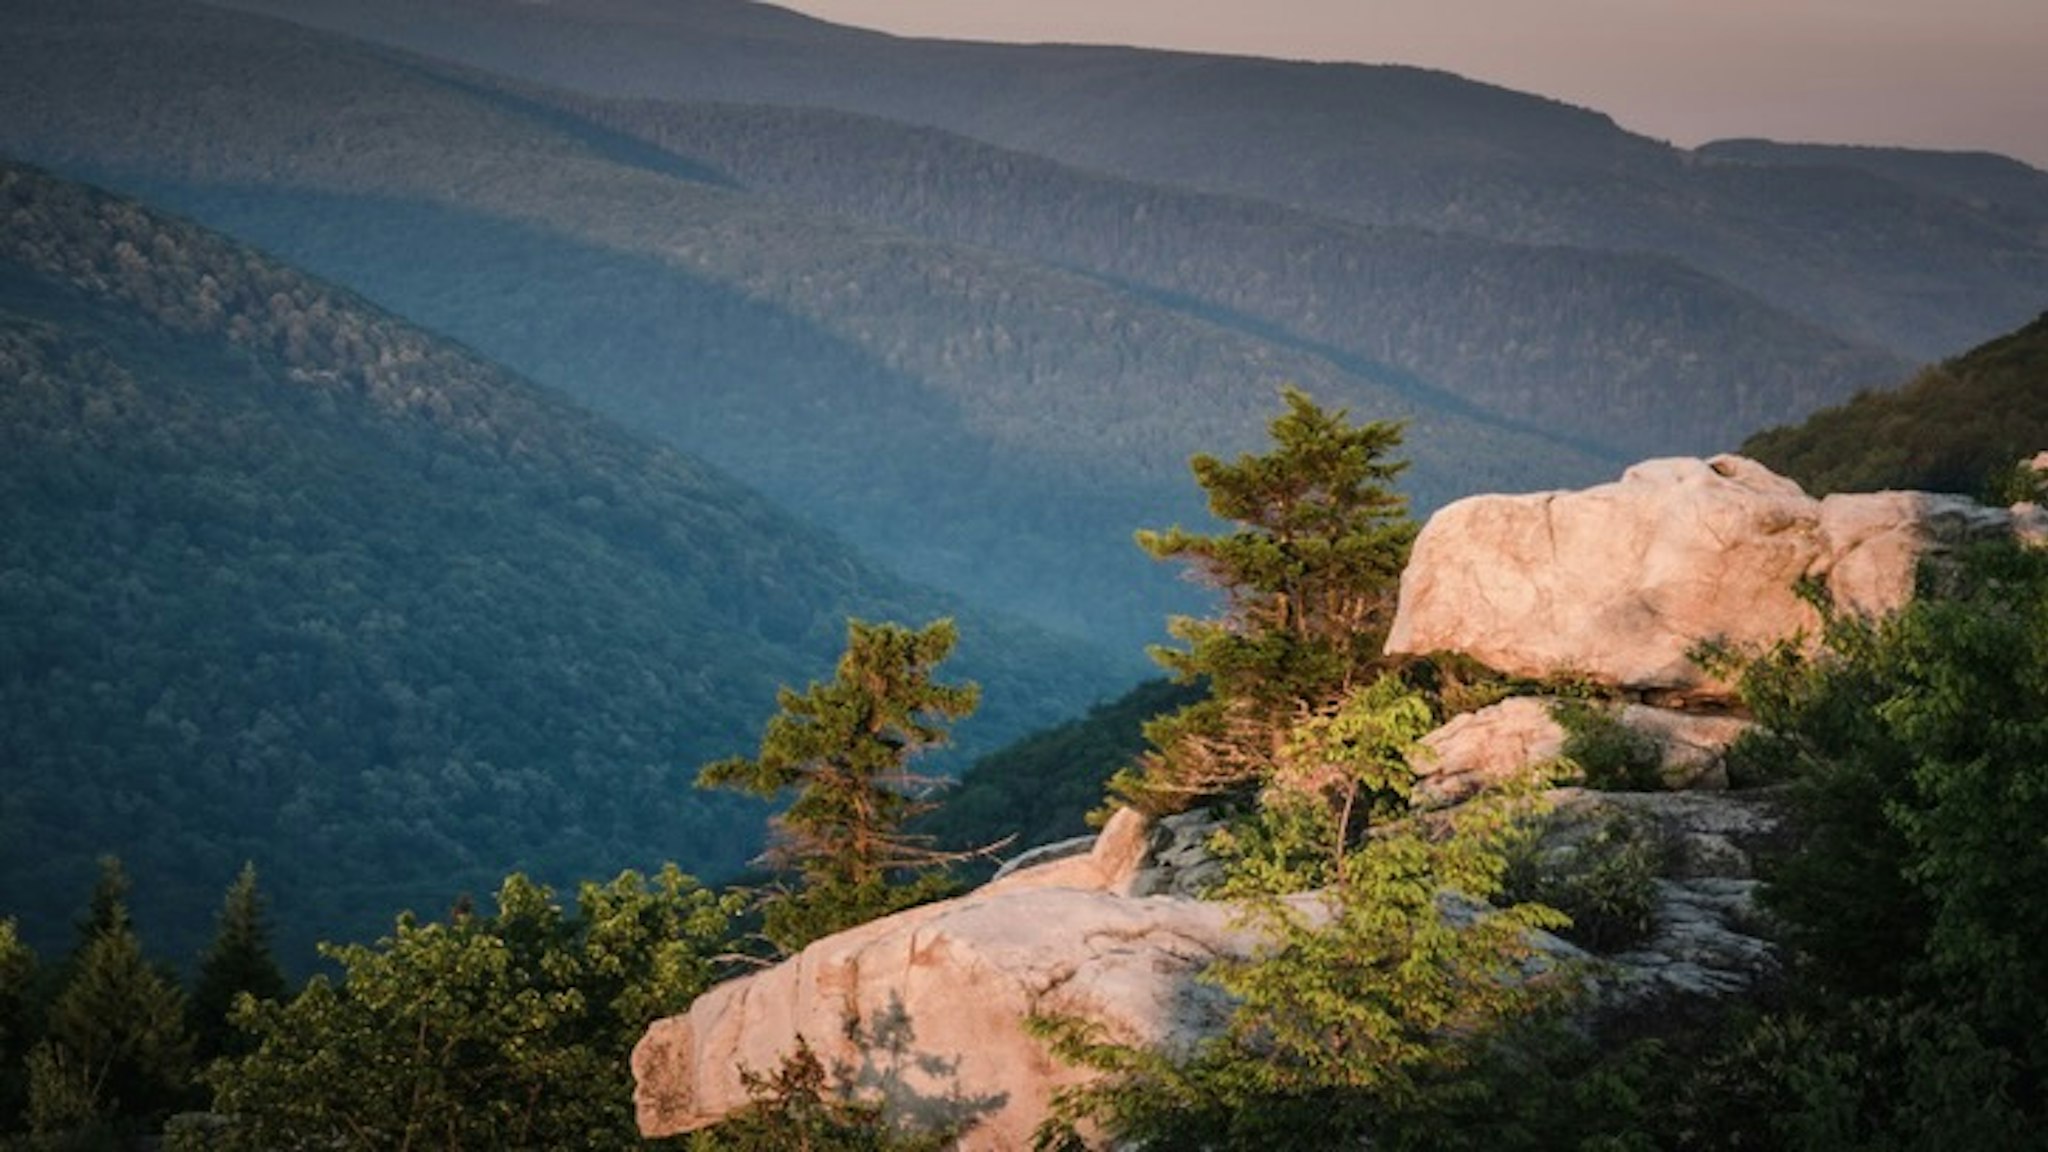 Mountains of West Virginia - stock photo Mountains of West Virginia in Dolly Sods Wilderness